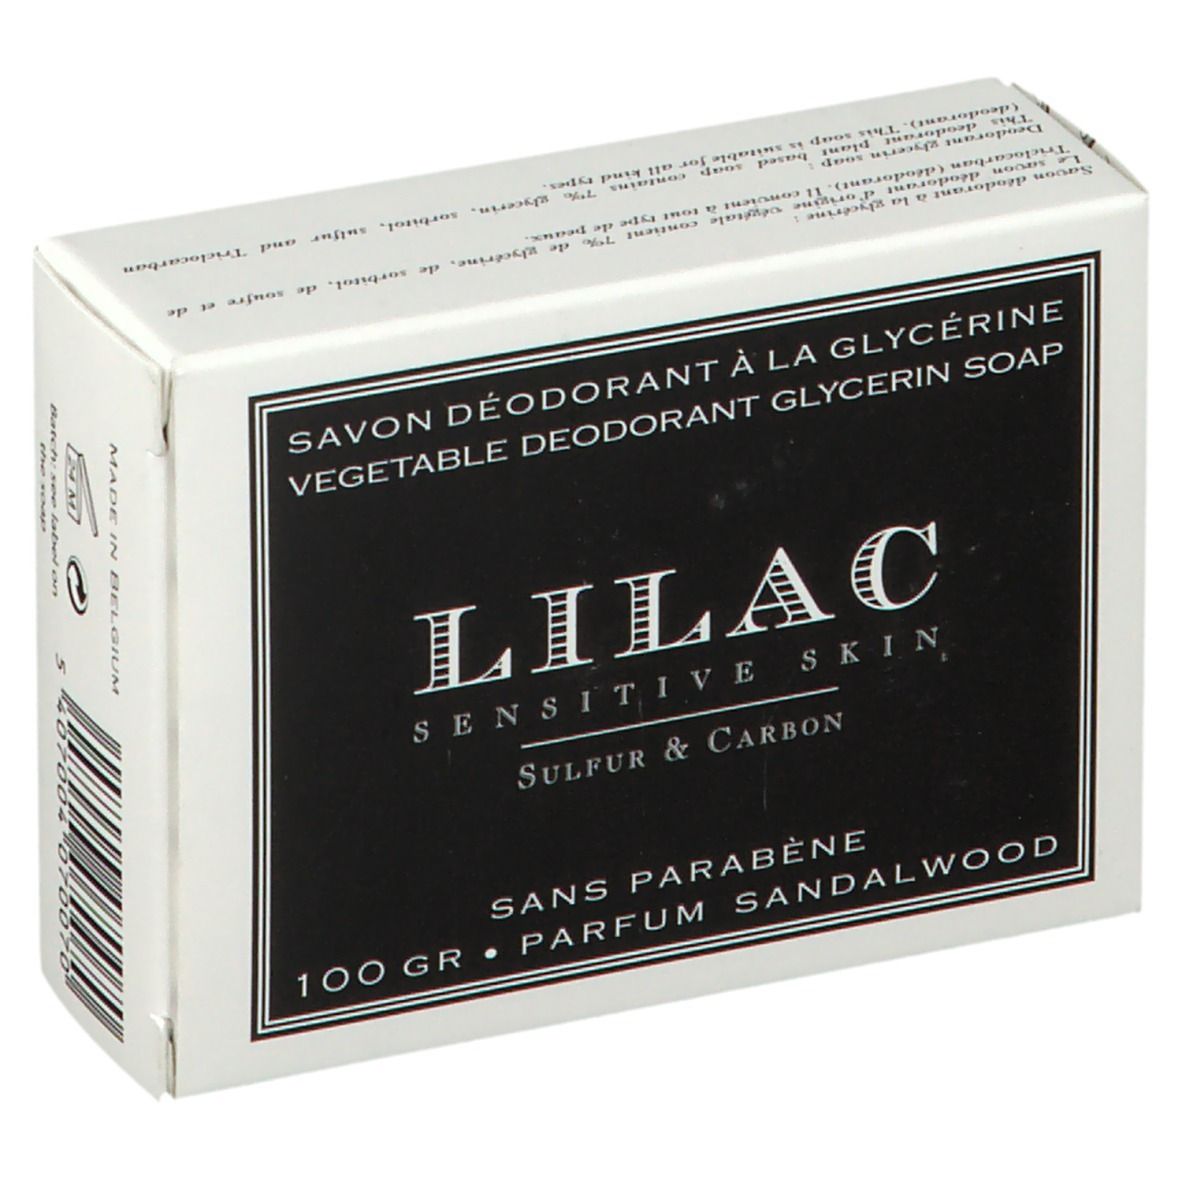 Lilac Senstive Skin Sulfure et carbone Savon